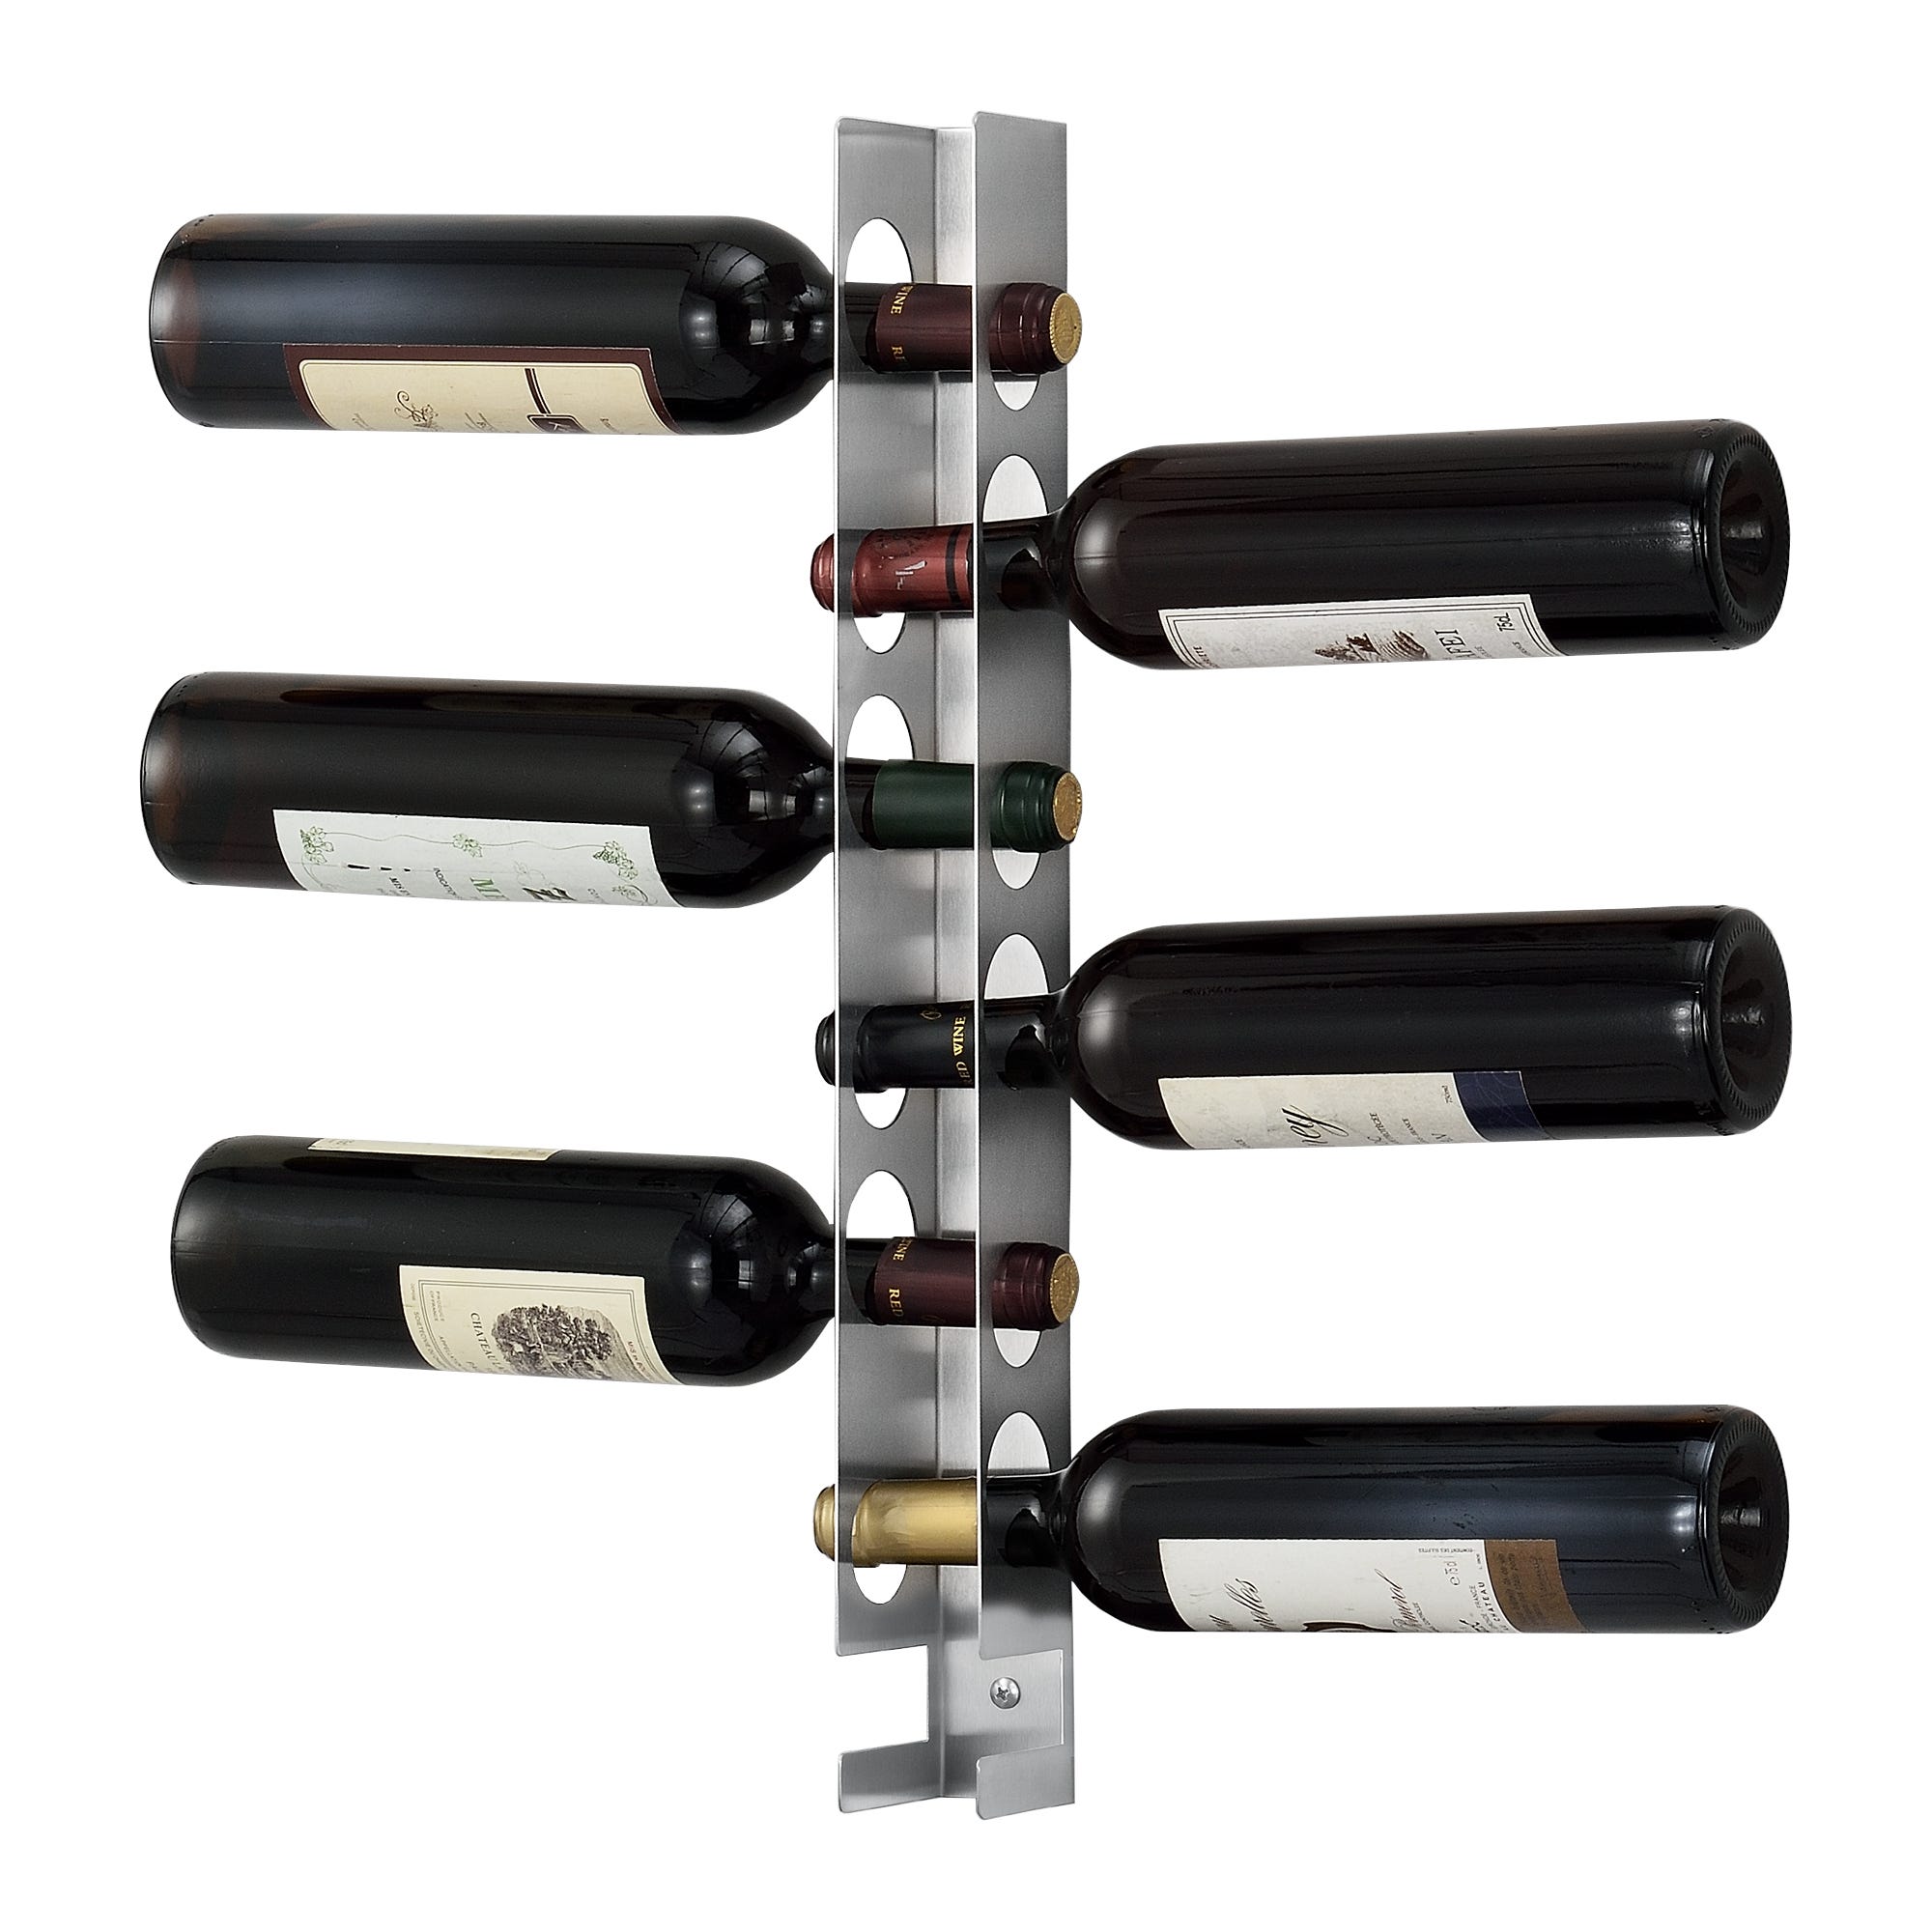 Portabottiglie Pensile da Vino 55 x 5 x 7 cm Supporto in Acciaio per 6  Bottiglie Cantinetta da Parete in Metallo Scaffale per Bottiglie da Vino